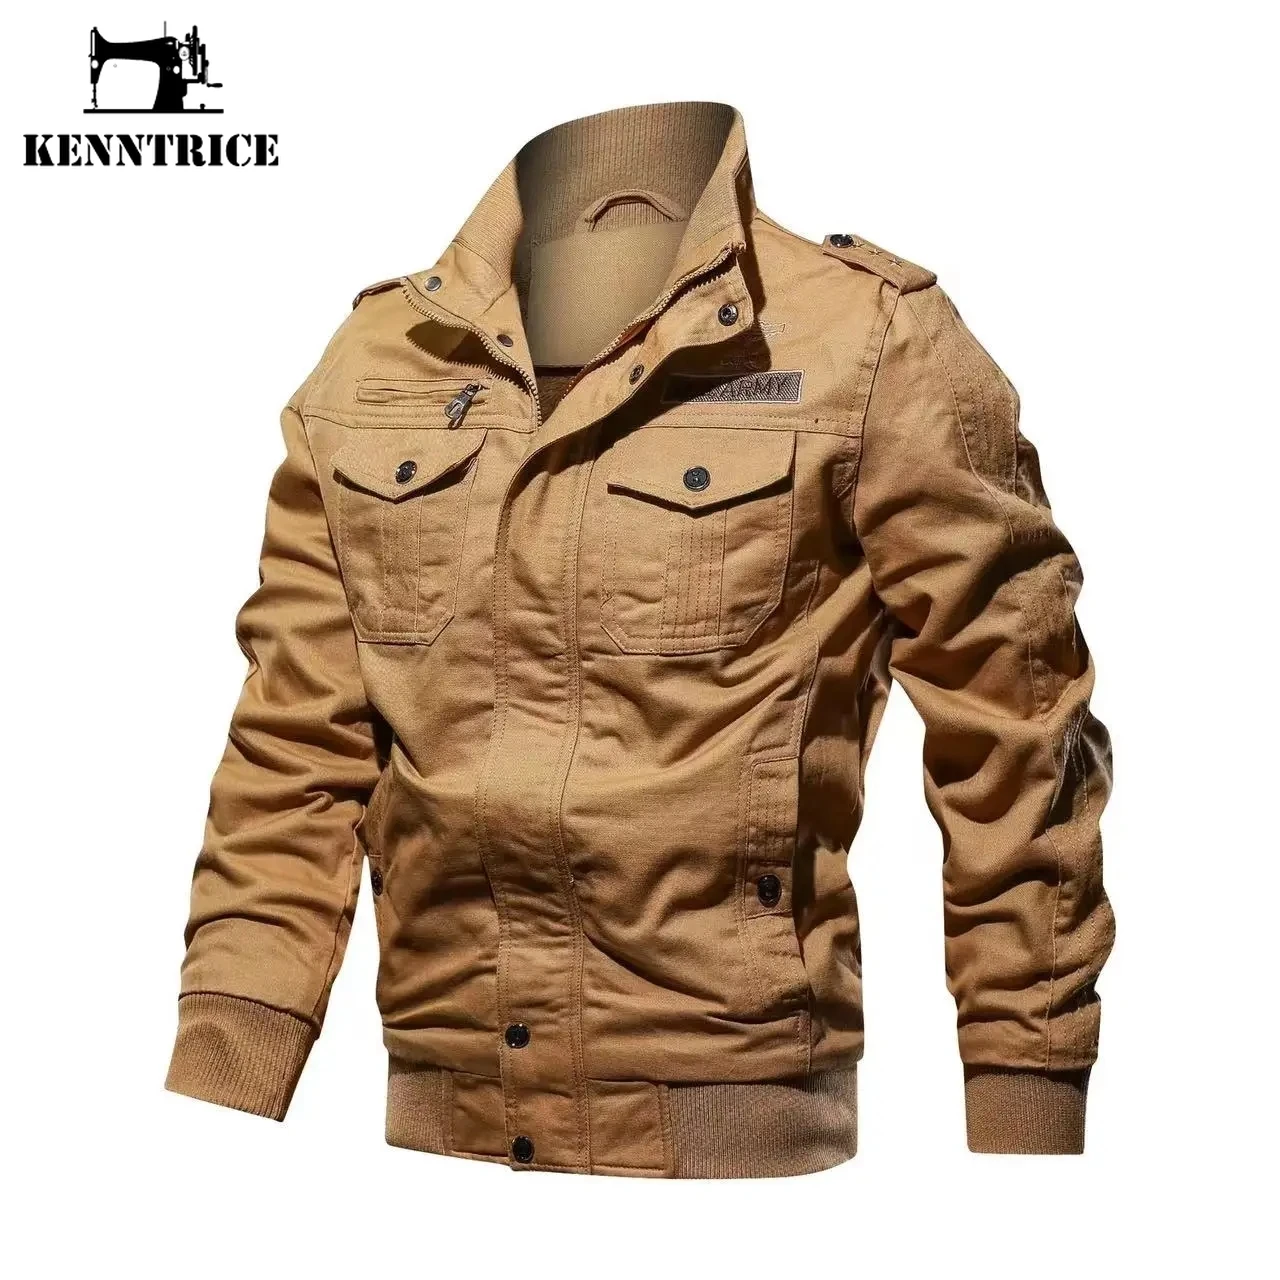 

Kenntrice Men Military Tactical Jacket Cotton Add Fleece Warm Combat Outerwear Fashion Vintage Stand Collar Zipper Coat